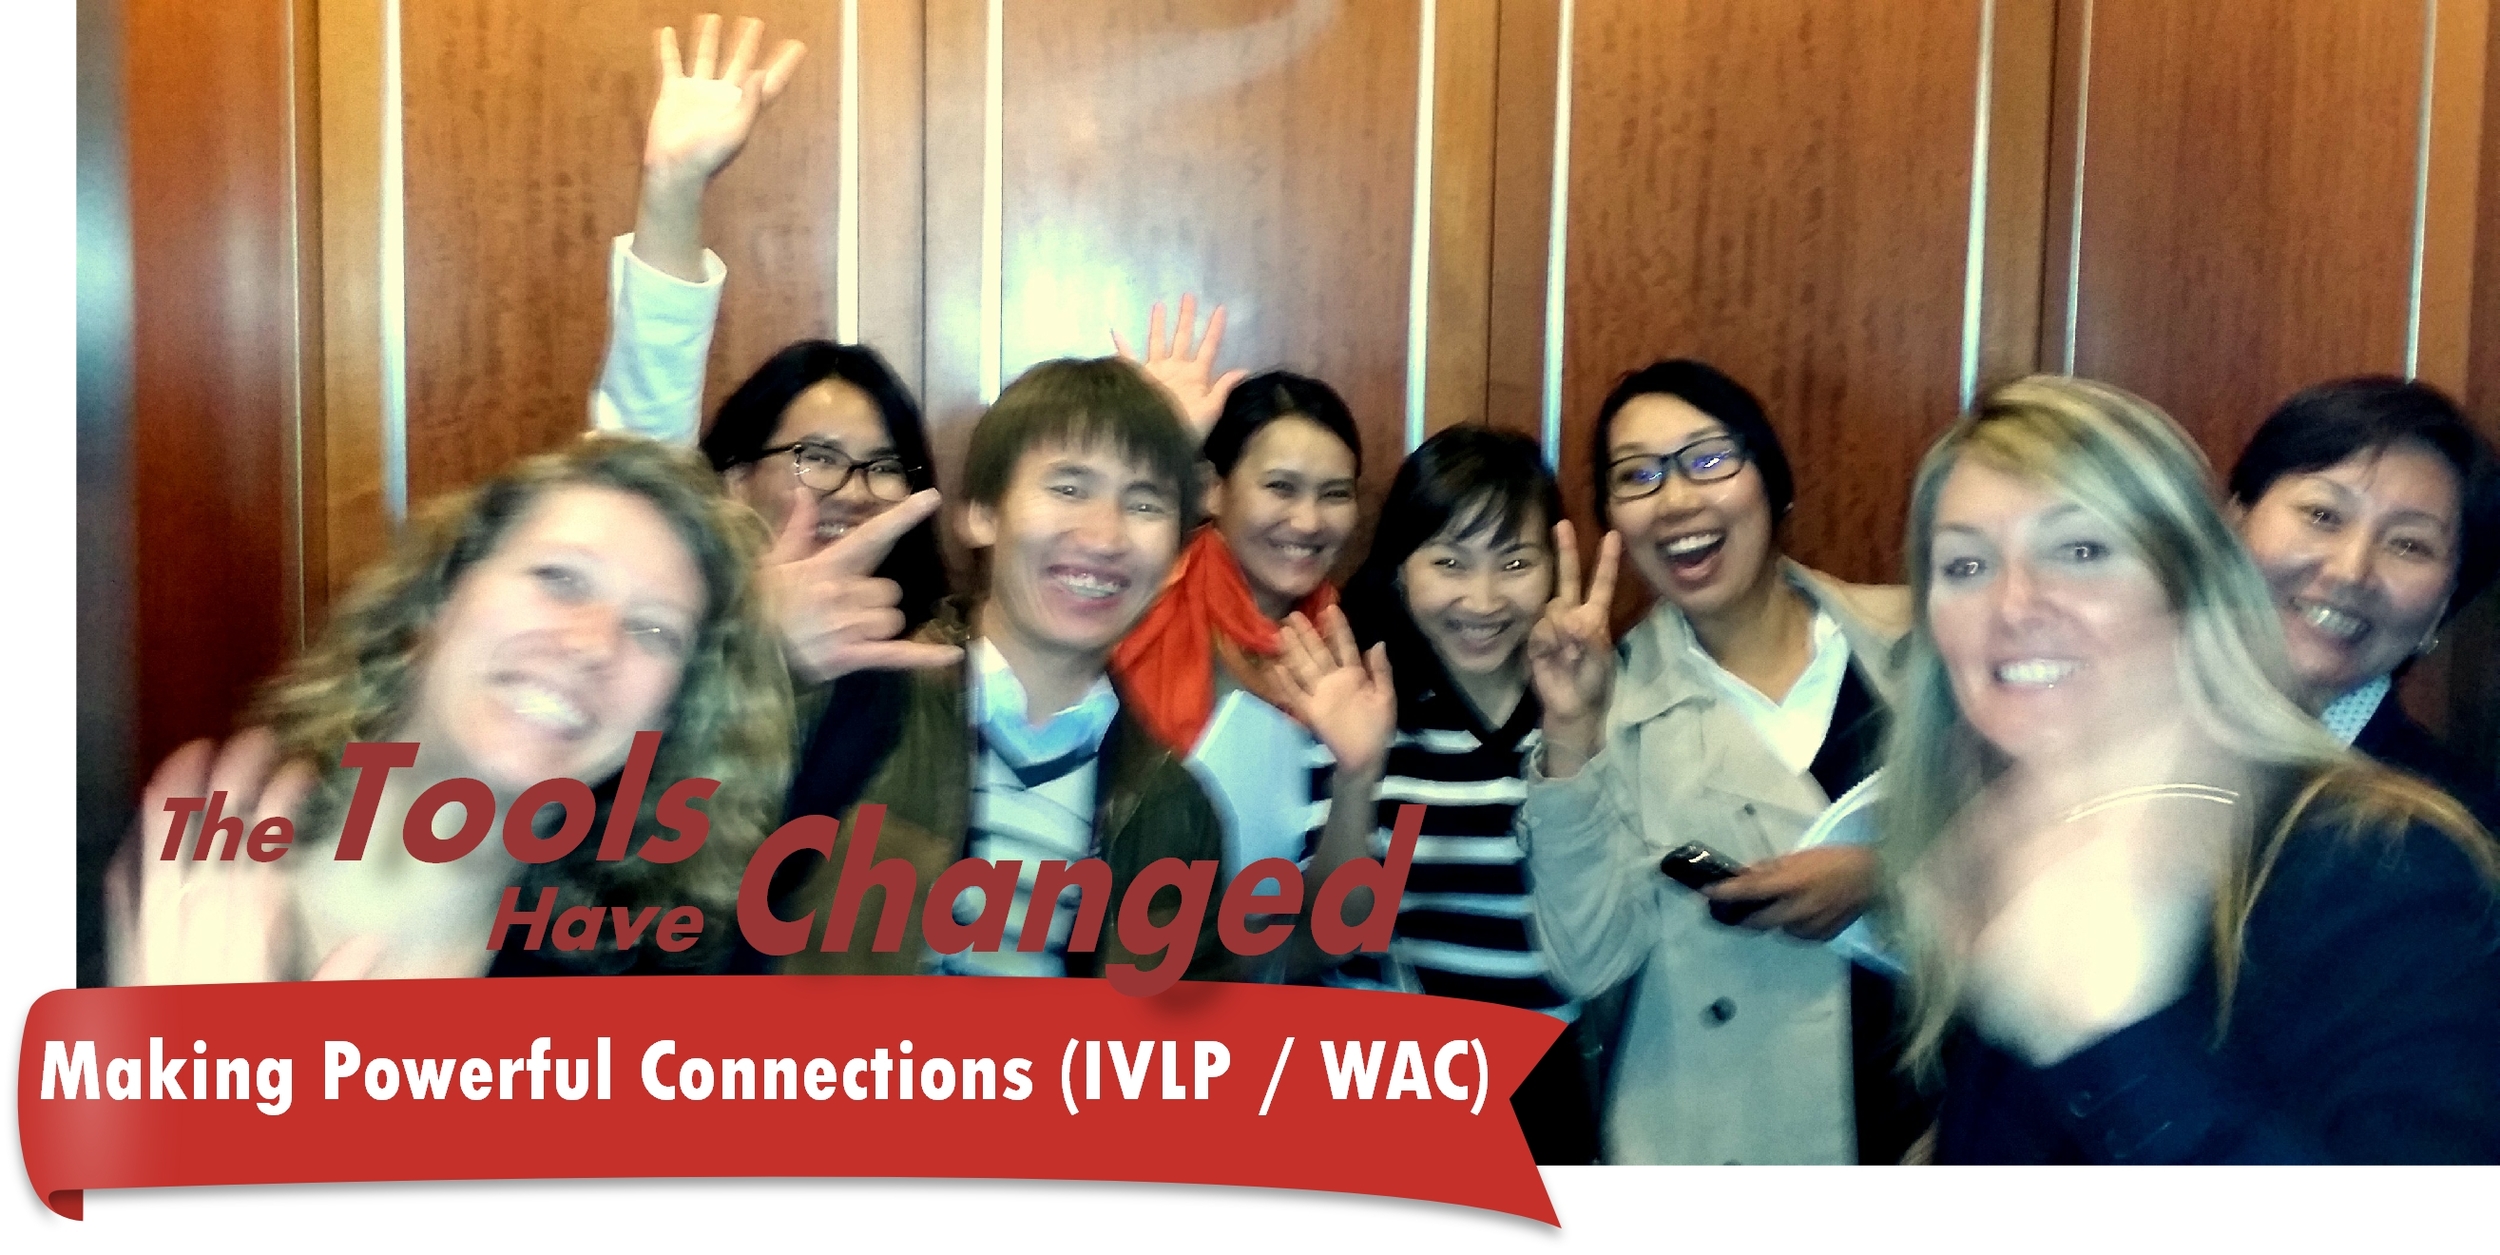 IVLP and WAC Entrepreneurs.jpg